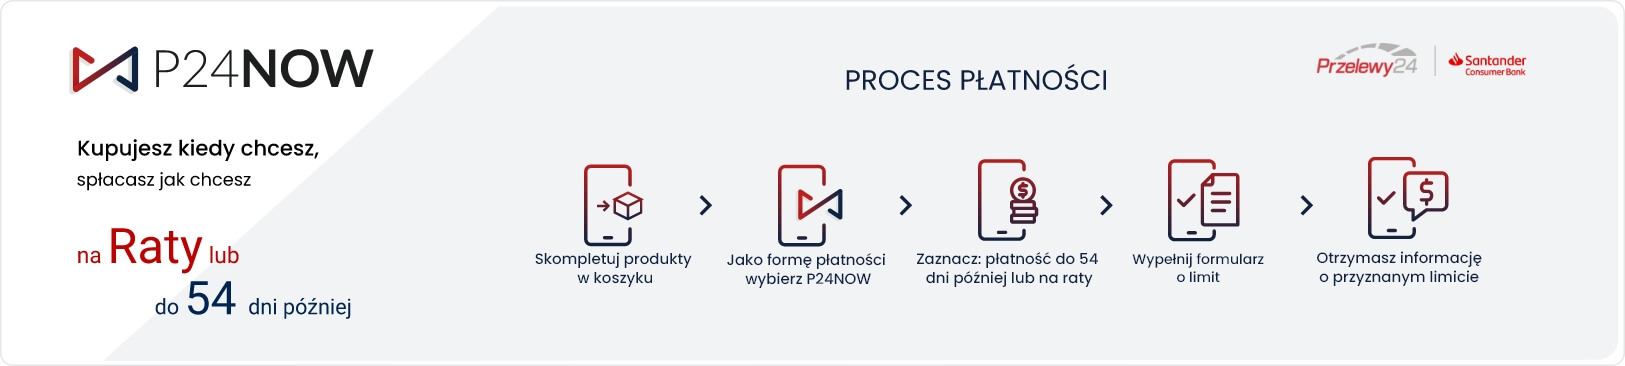 P24 proces platnosci